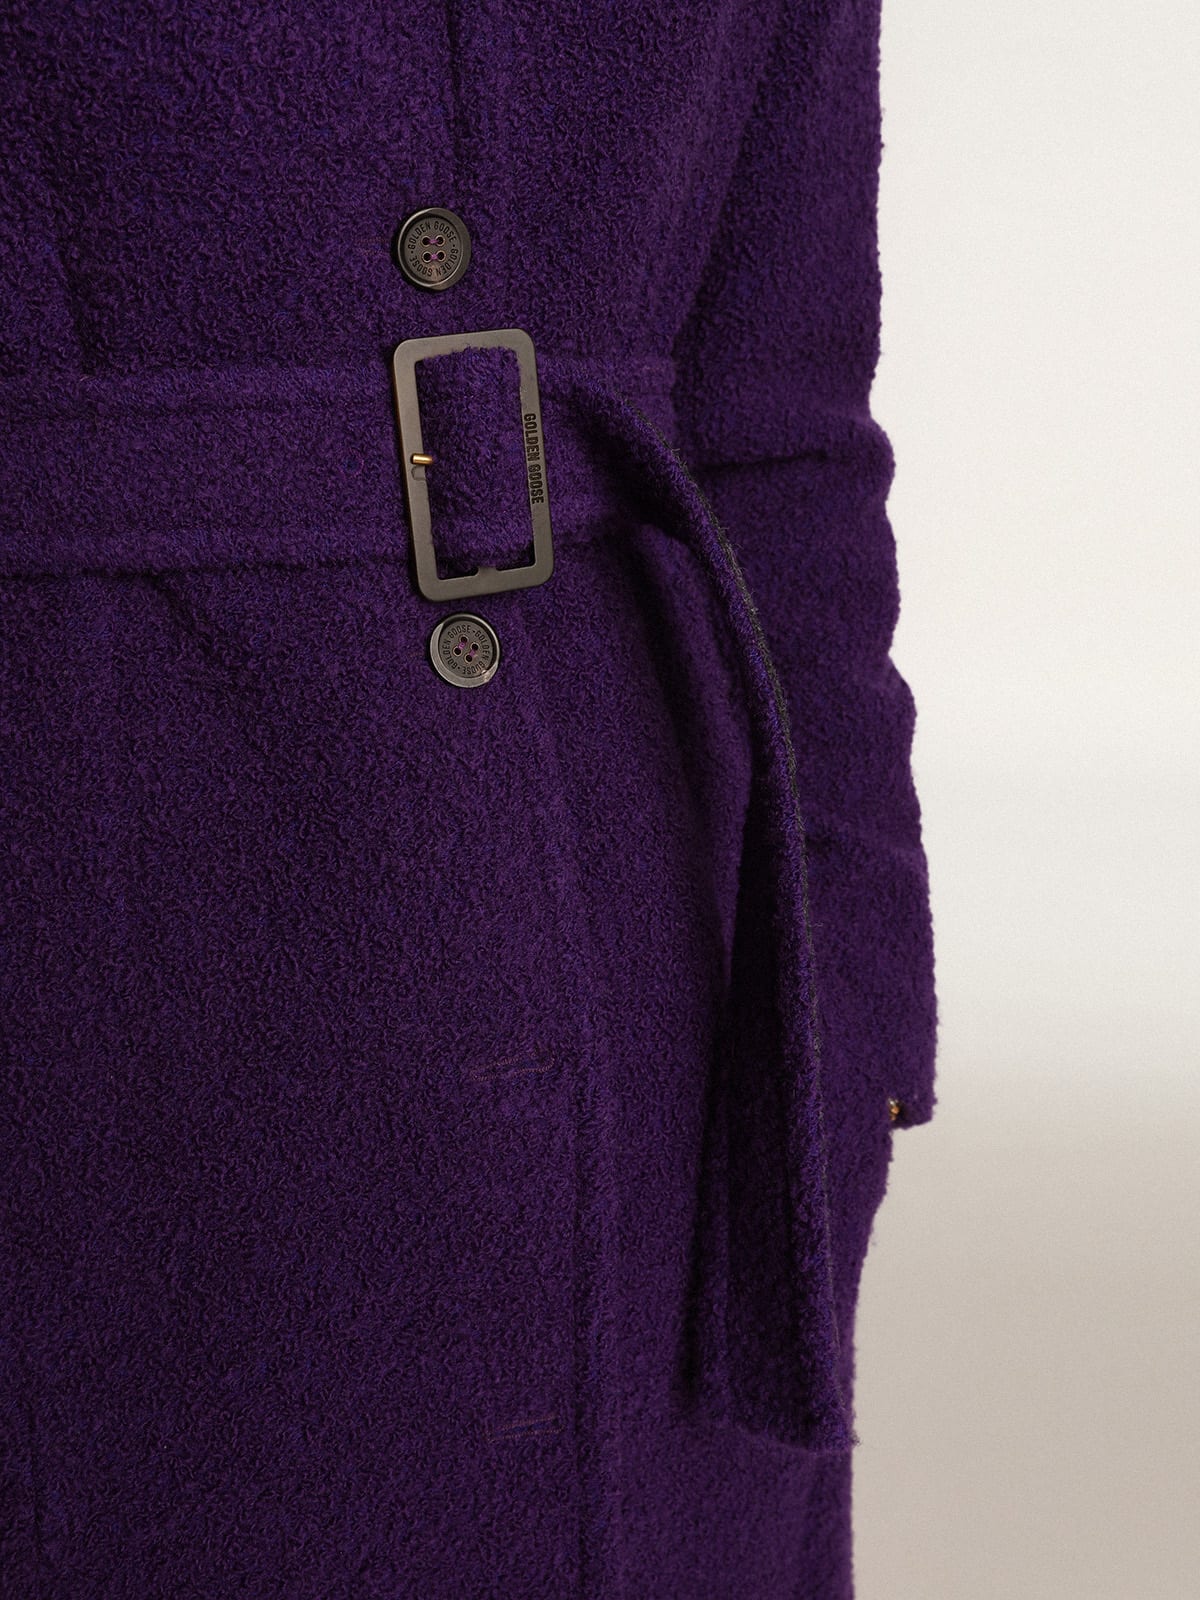 Golden Goose - Abrigo de lana púrpura índigo y forro estampado para mujer in 